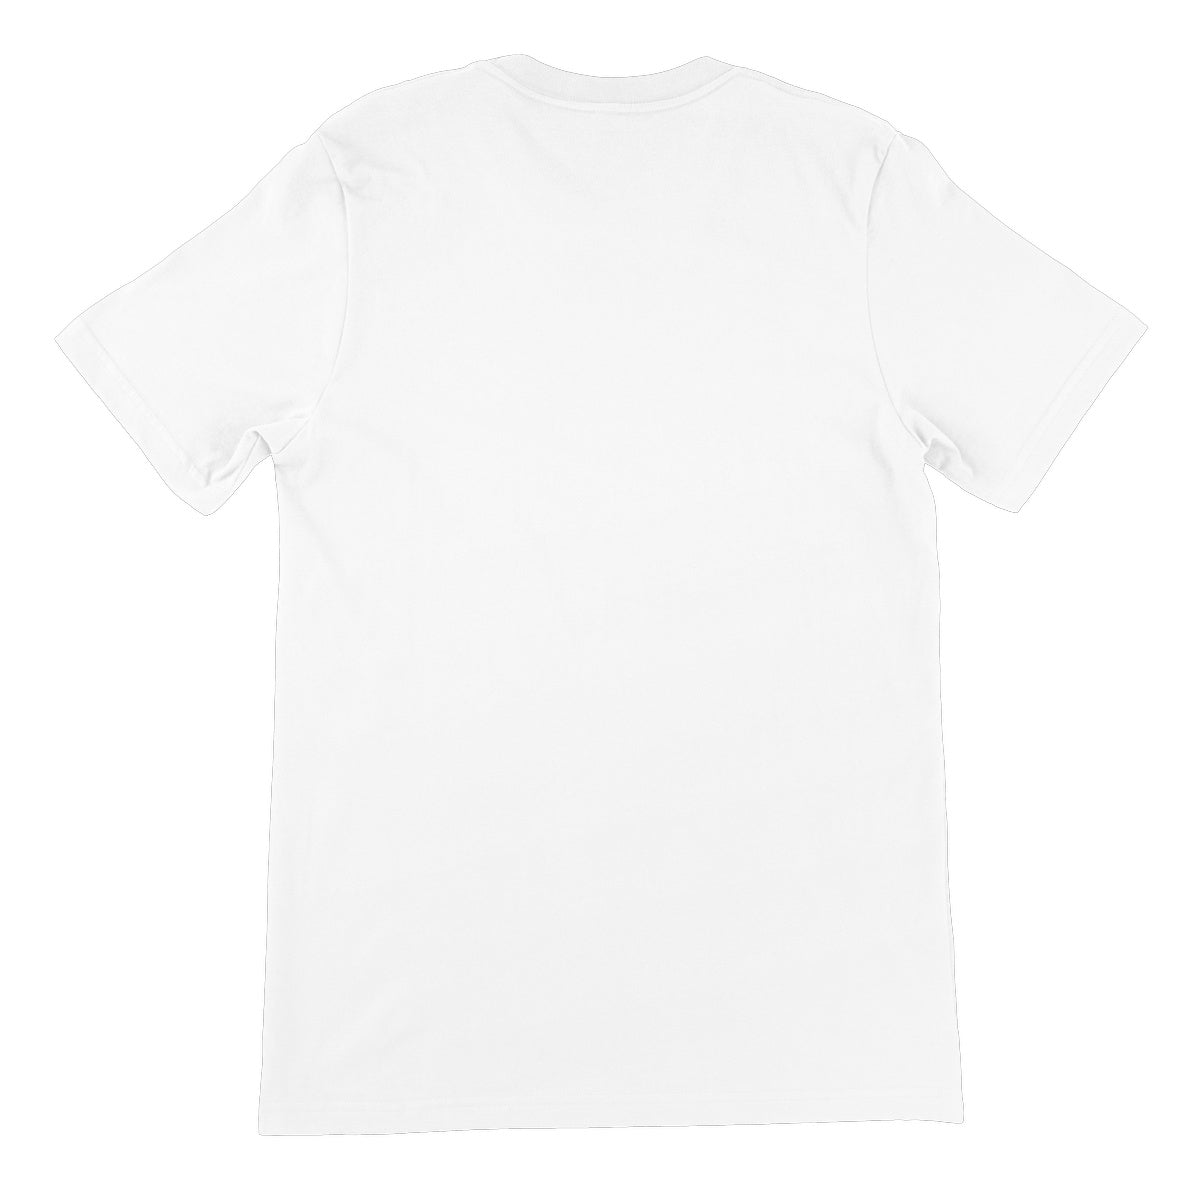 Möbius Flow, Pond Sphere Unisex Short Sleeve T-Shirt